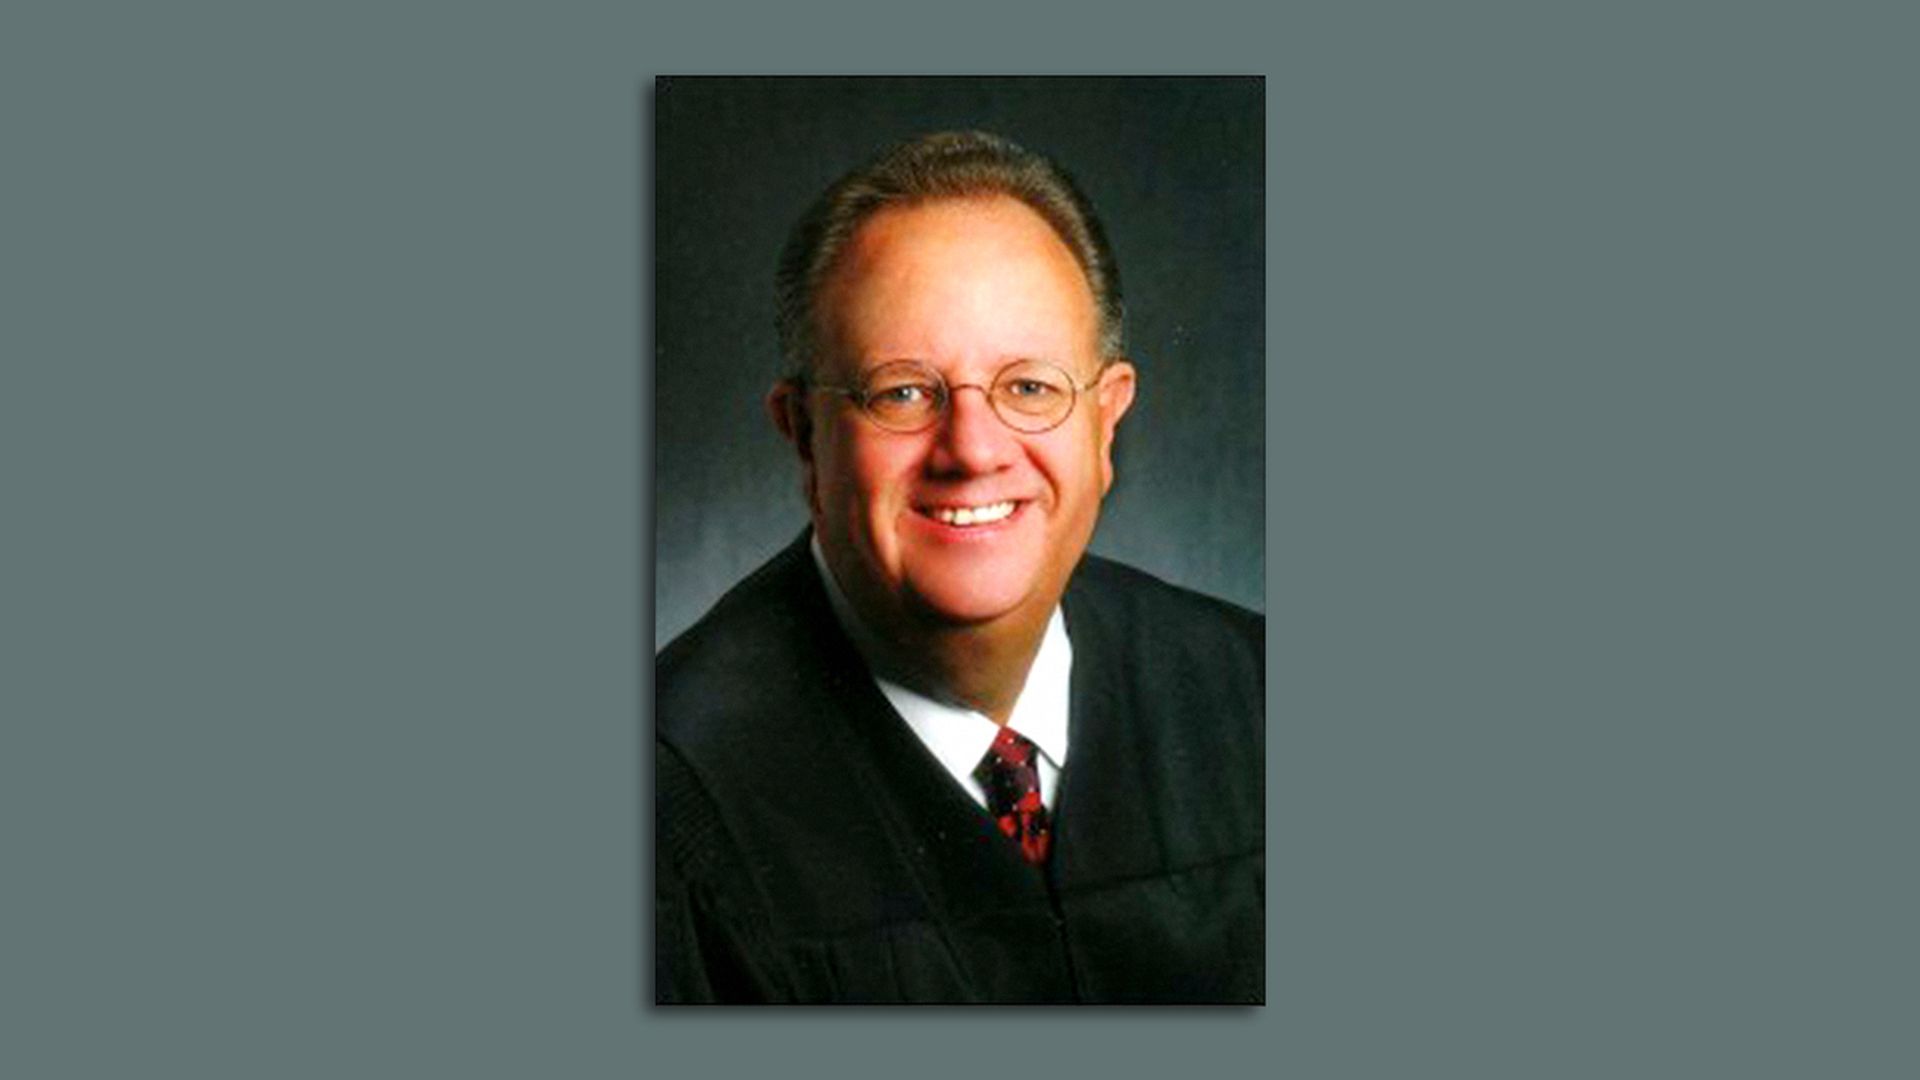 Nashville Judge Phil Smith